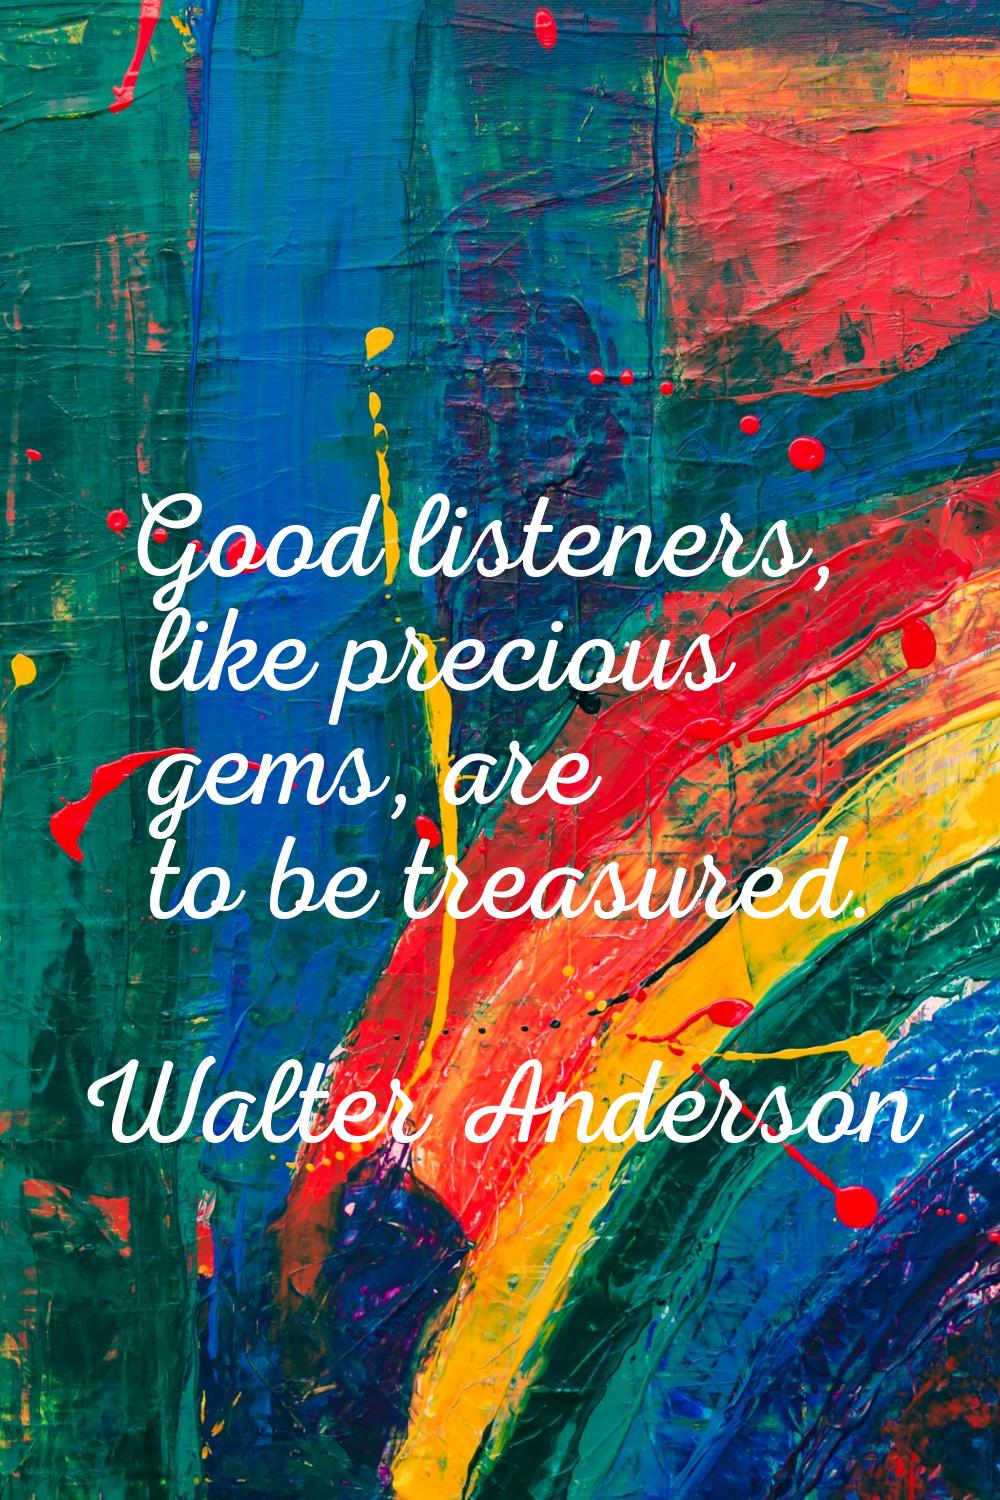 Good listeners, like precious gems, are to be treasured.